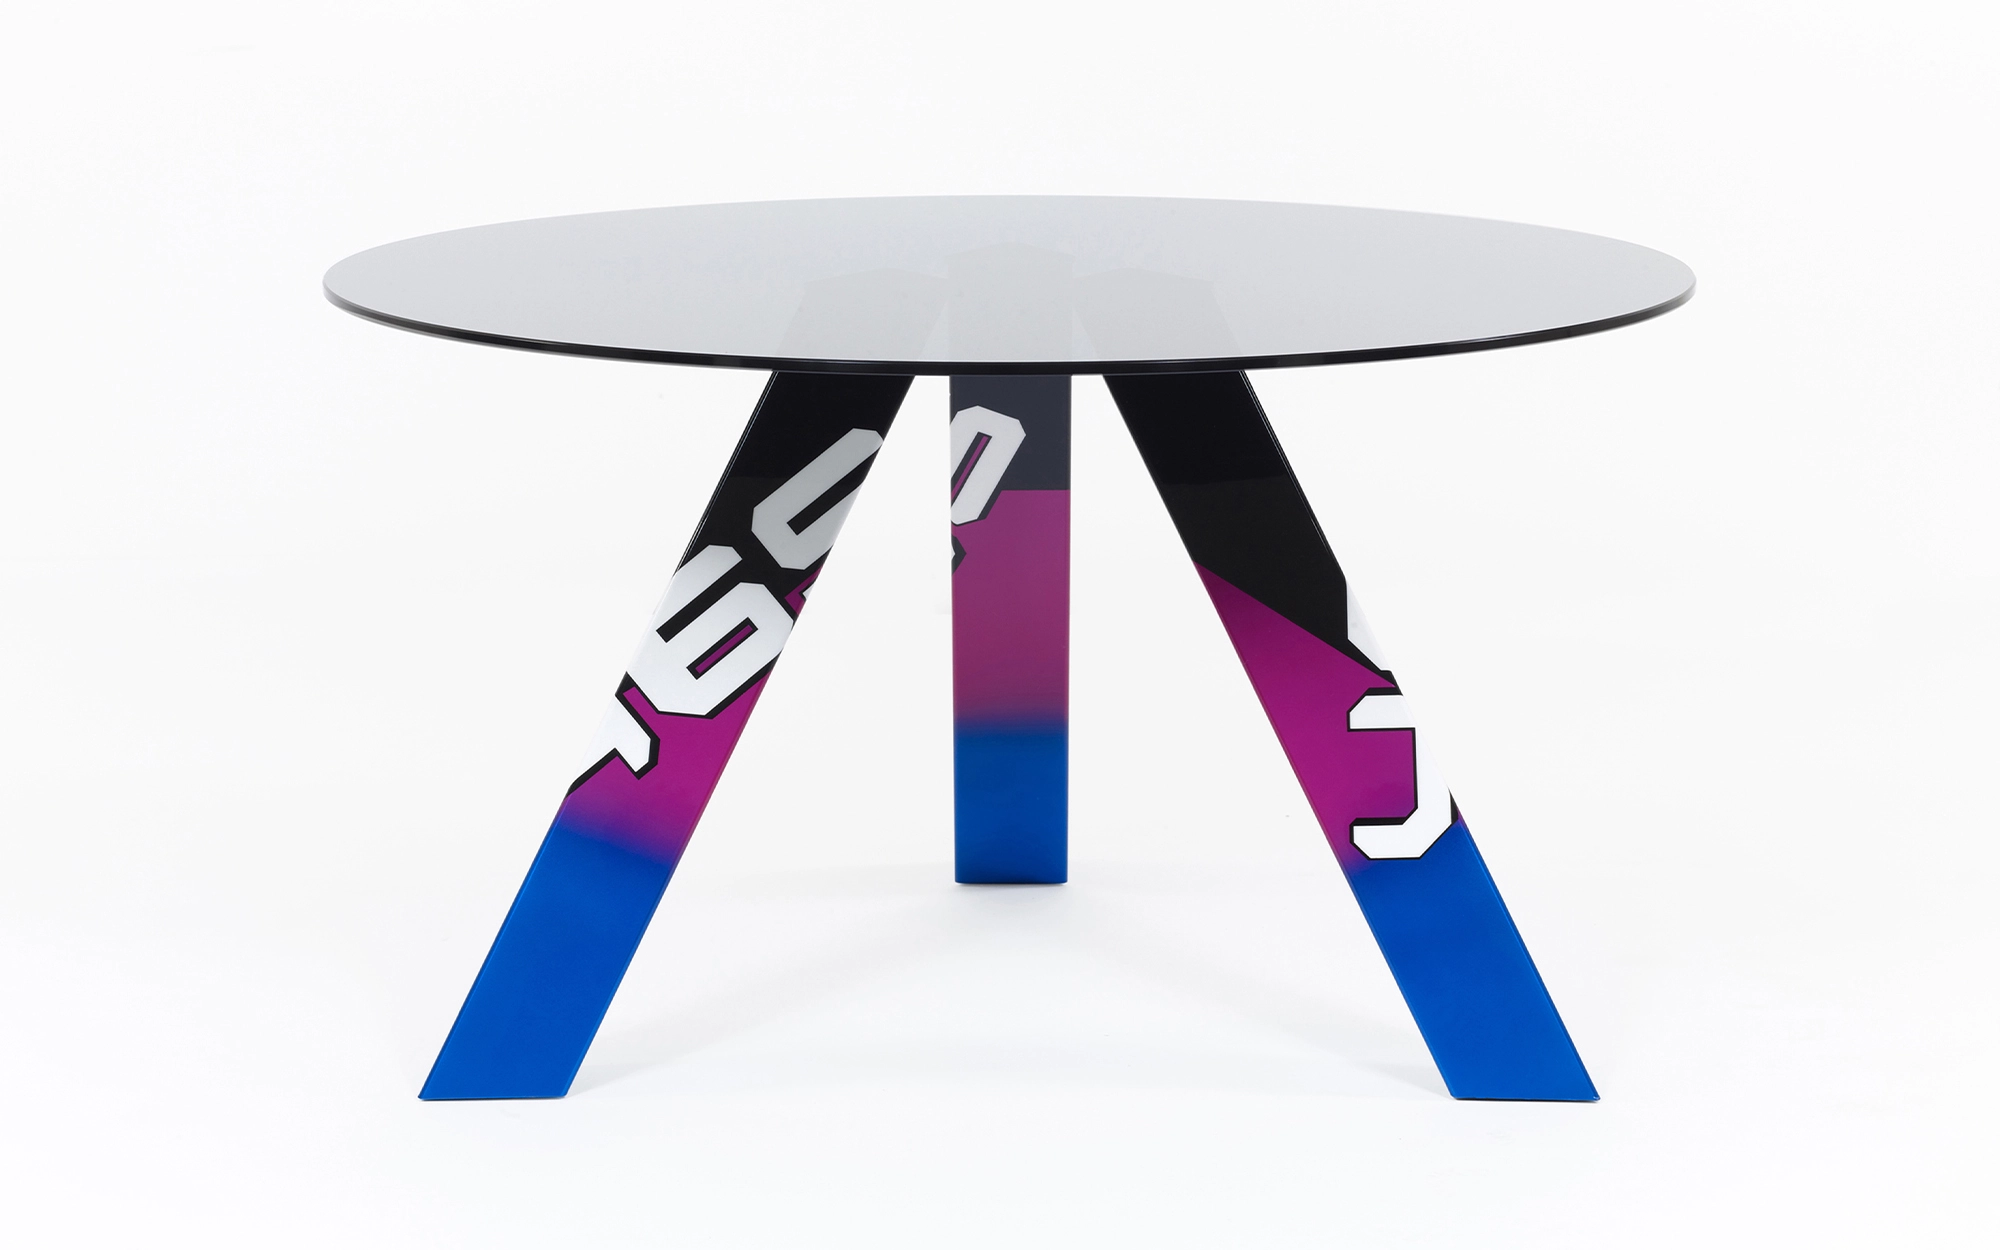 465 Table - Konstantin Grcic - Stool - Galerie kreo